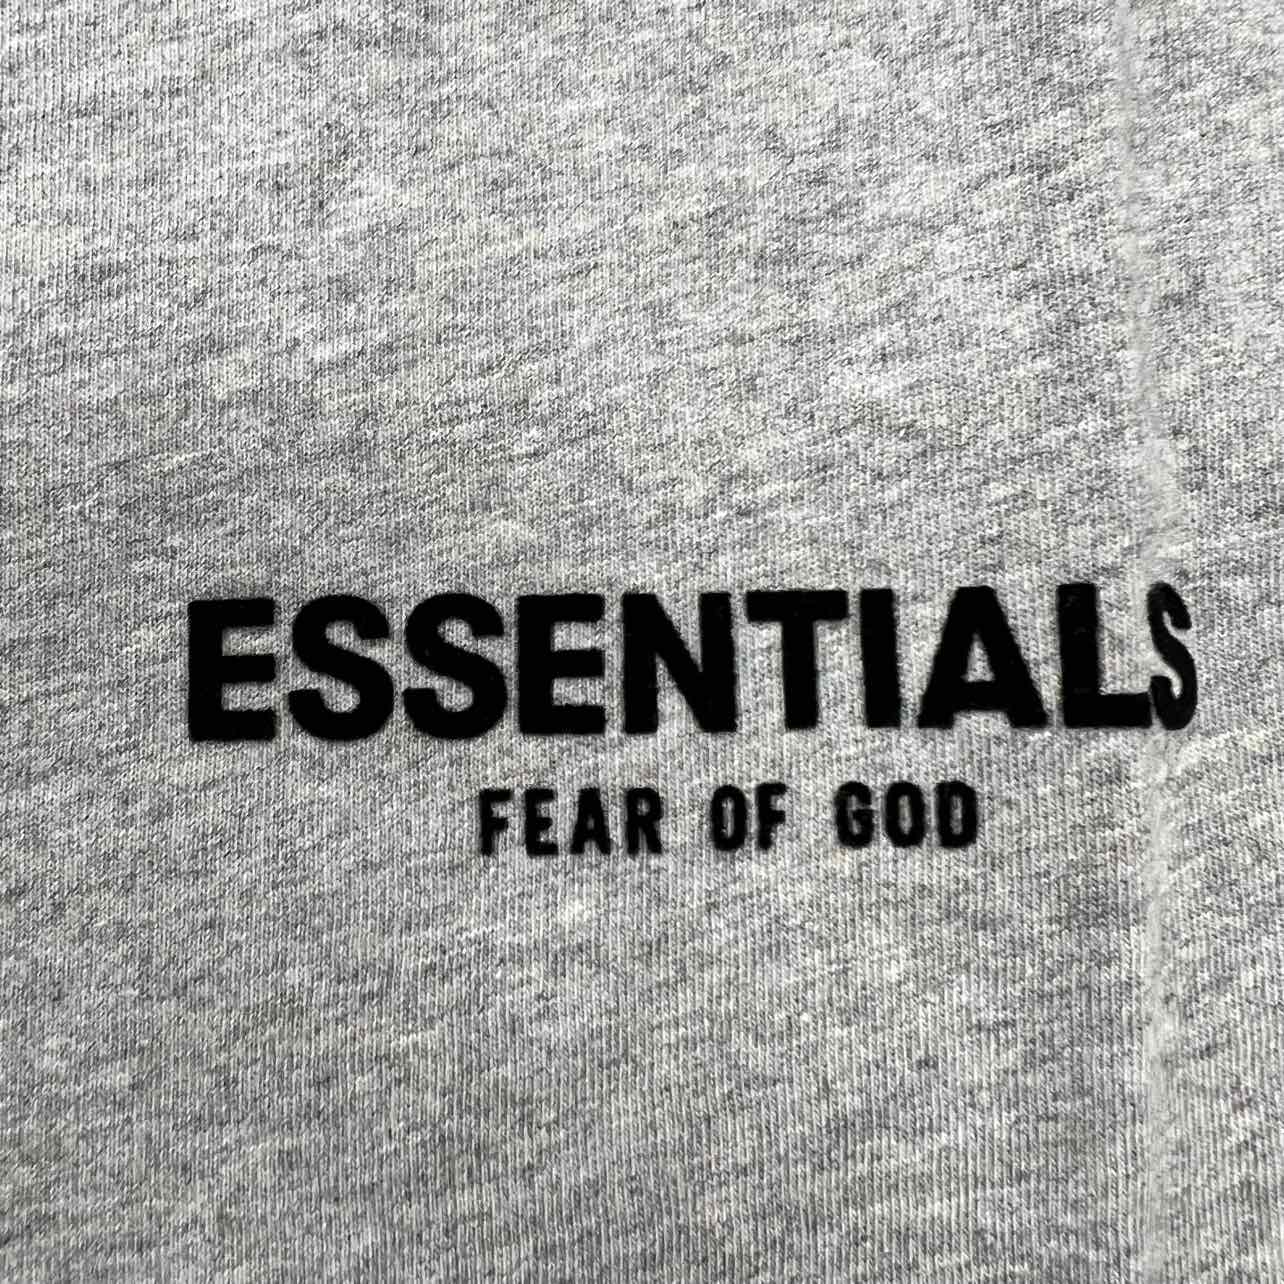 Fear of God T-Shirt "ESSENTIALS" Dark Oatmeal New Size XL